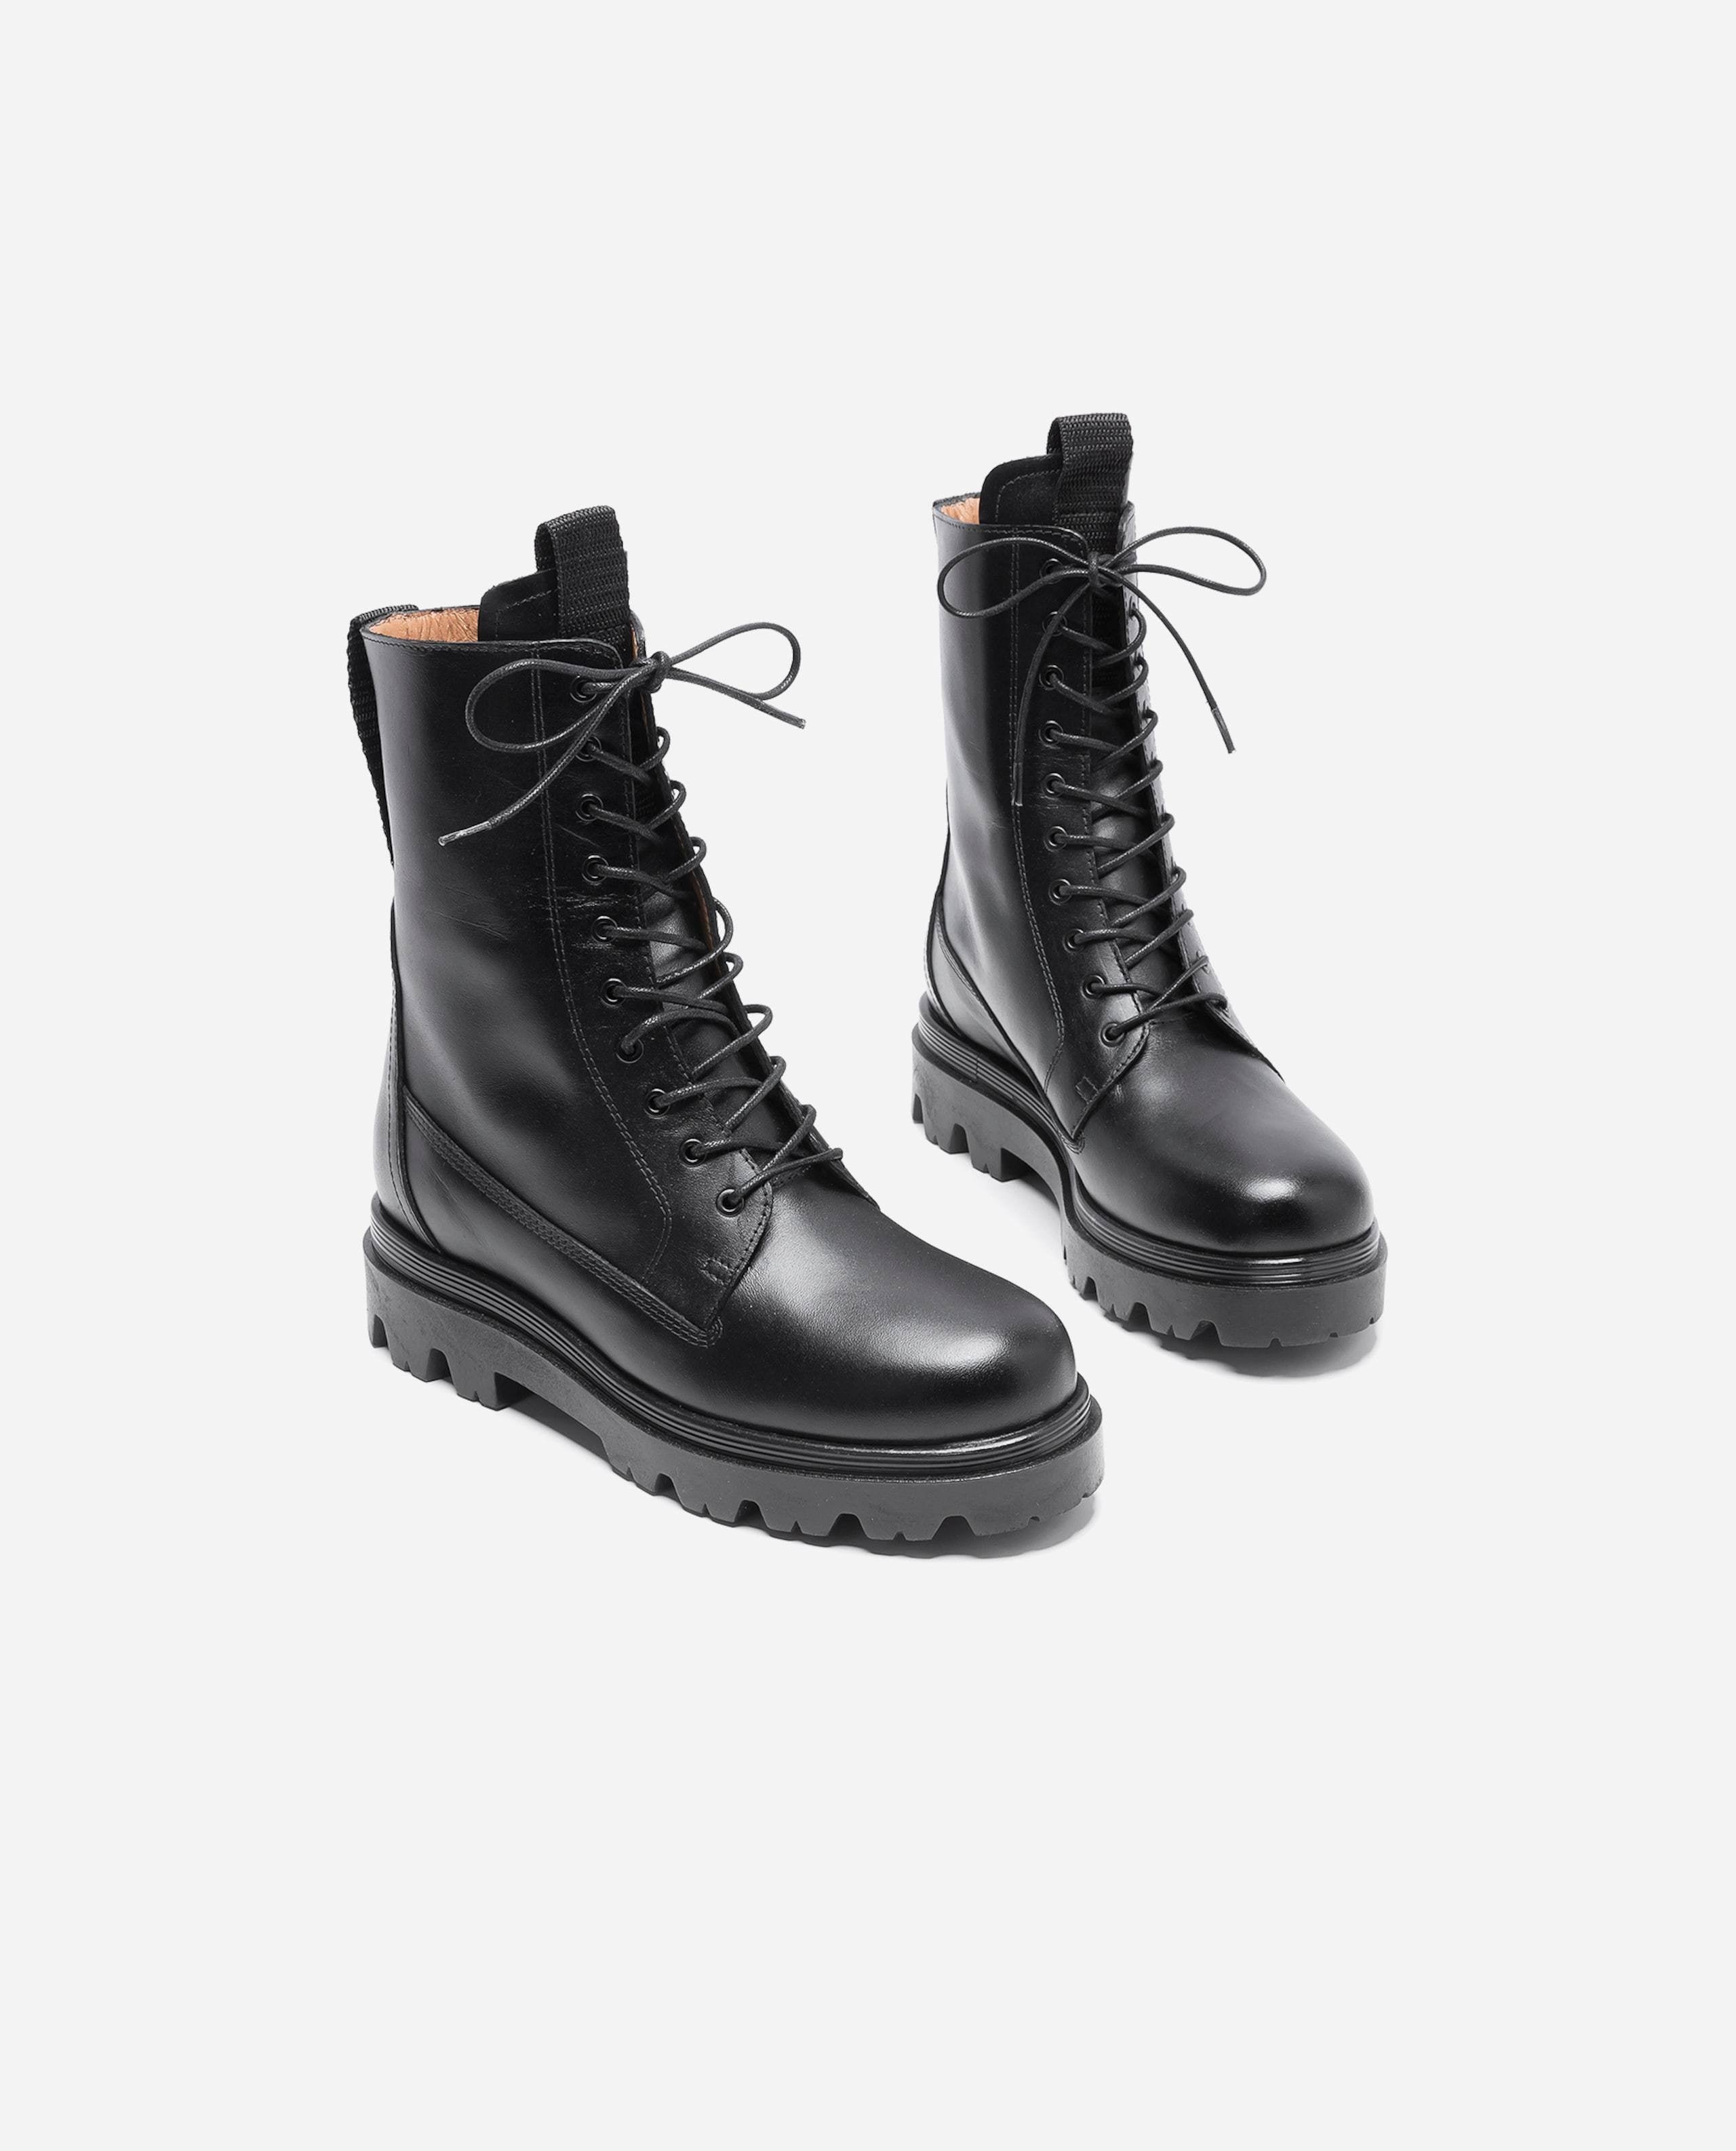 Lovi Black Leather Boots 20020815101-001 - 02